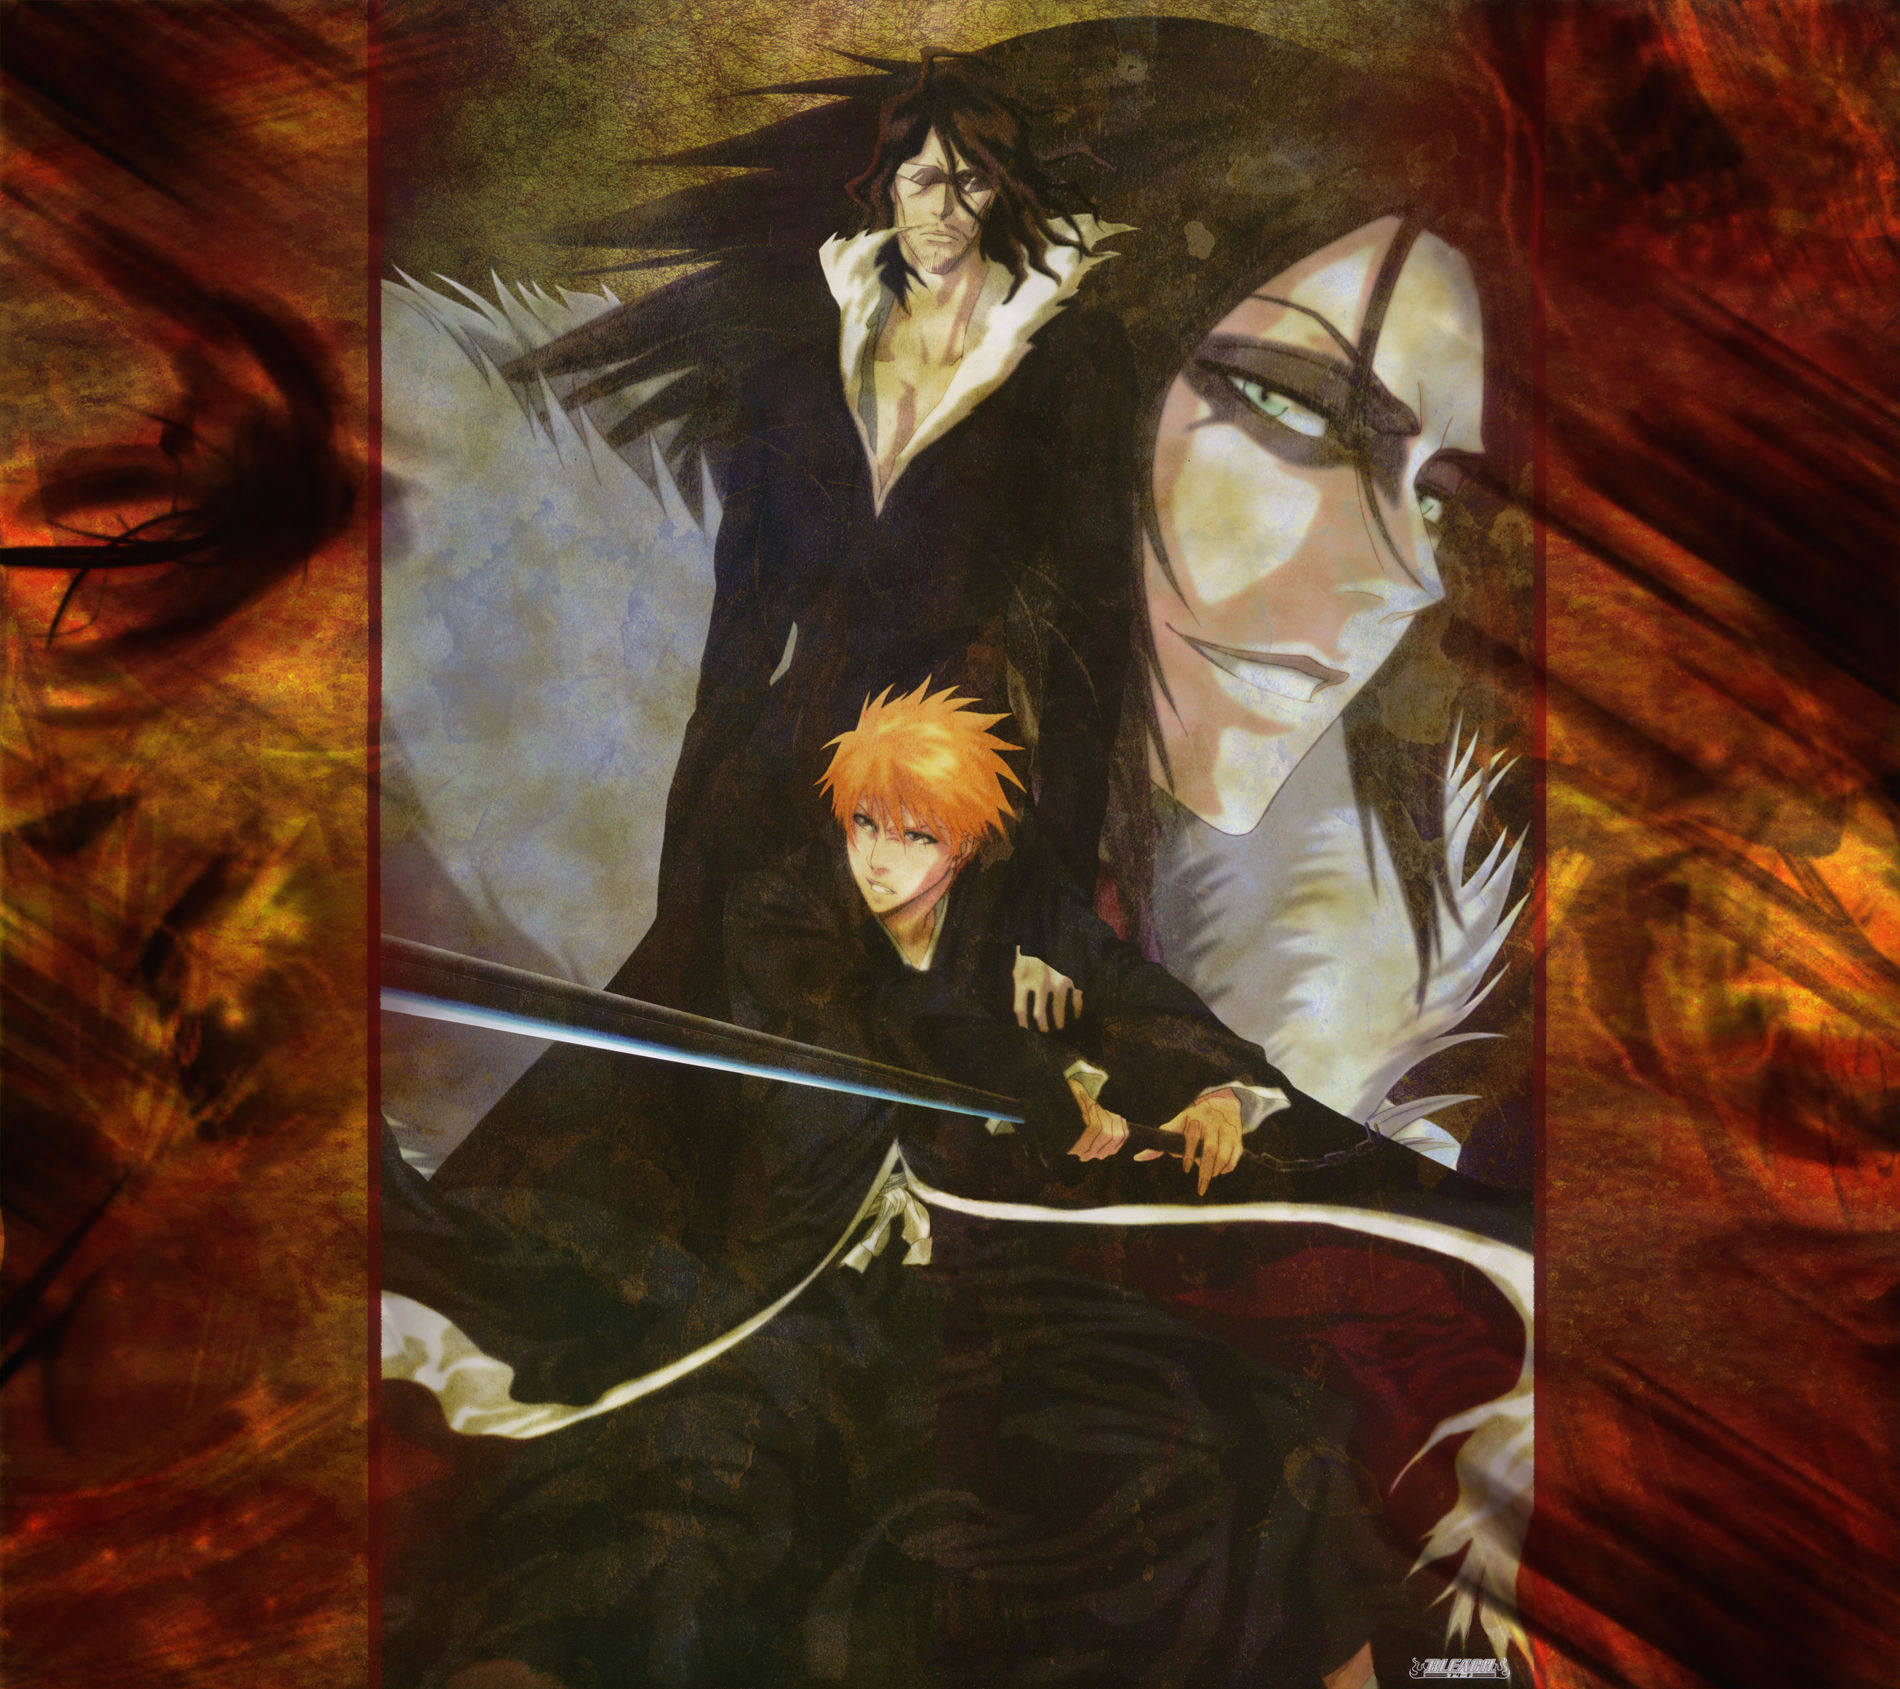 Ichigo Kurosaki holding Zangetsu sword (Bleach) on a HD desktop wallpaper.